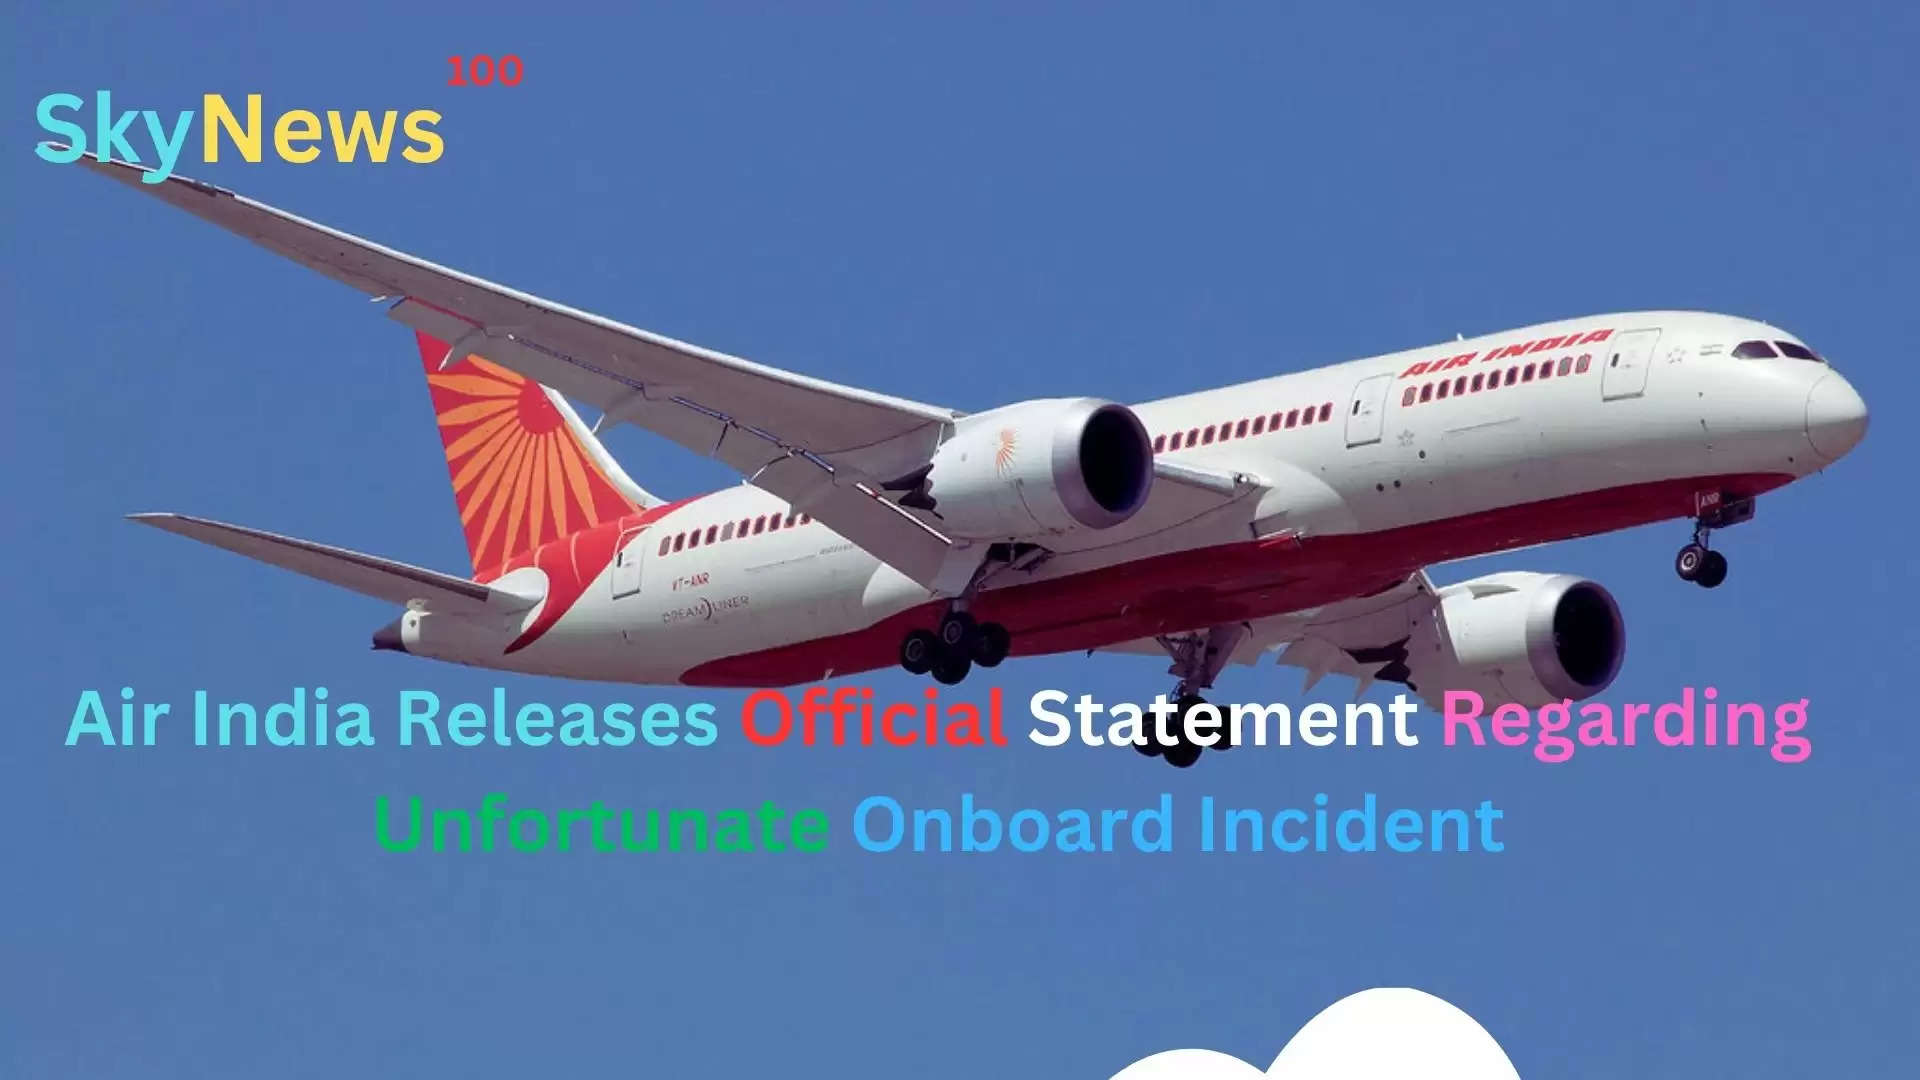 Air India Responds to Disturbing Incident: Passenger's In-Flight Misbehavior